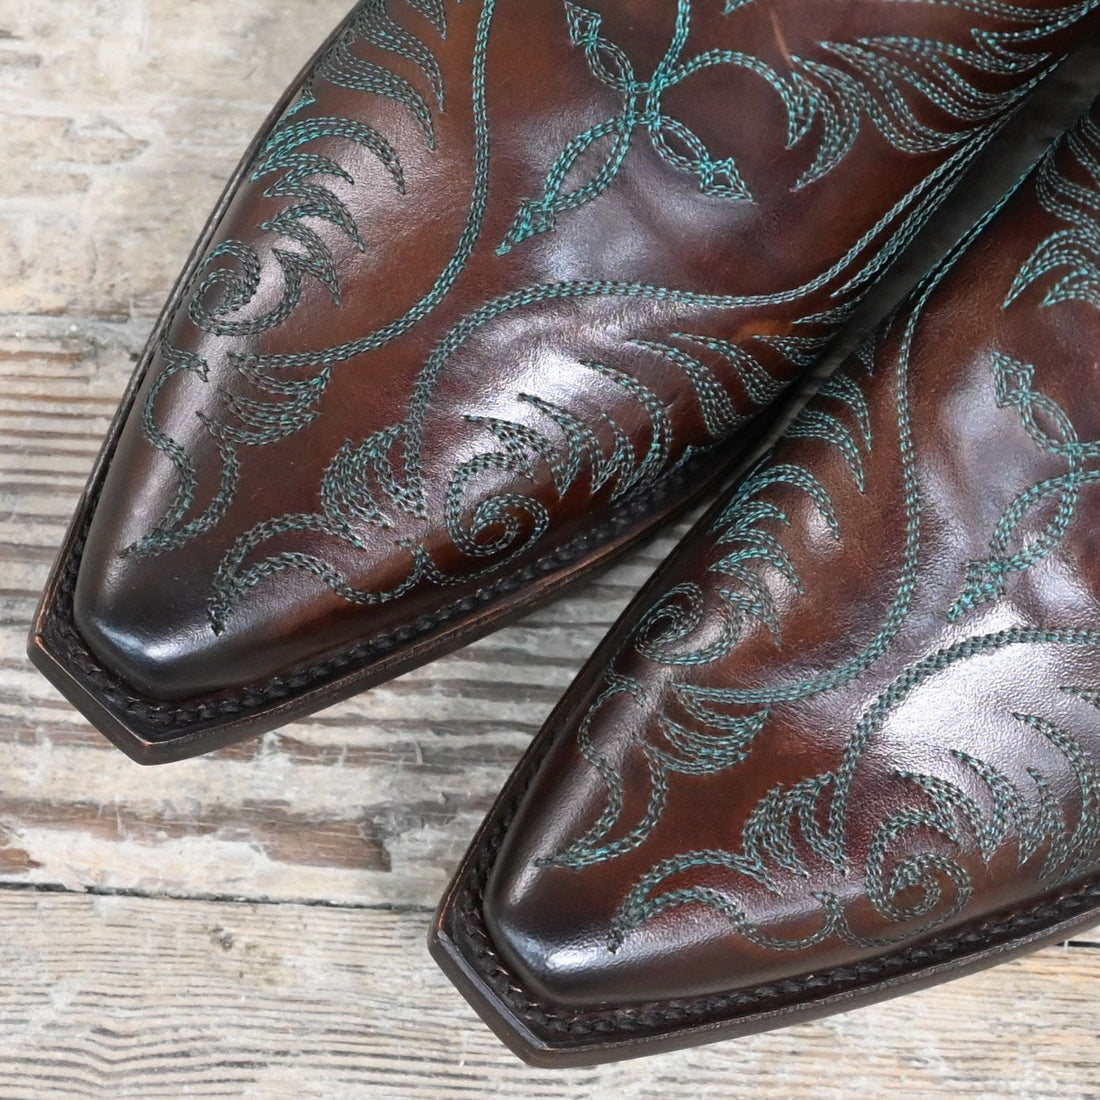 Ladies Western Mule (slide) In Burgundy W/Turquoise Stitching view of toe